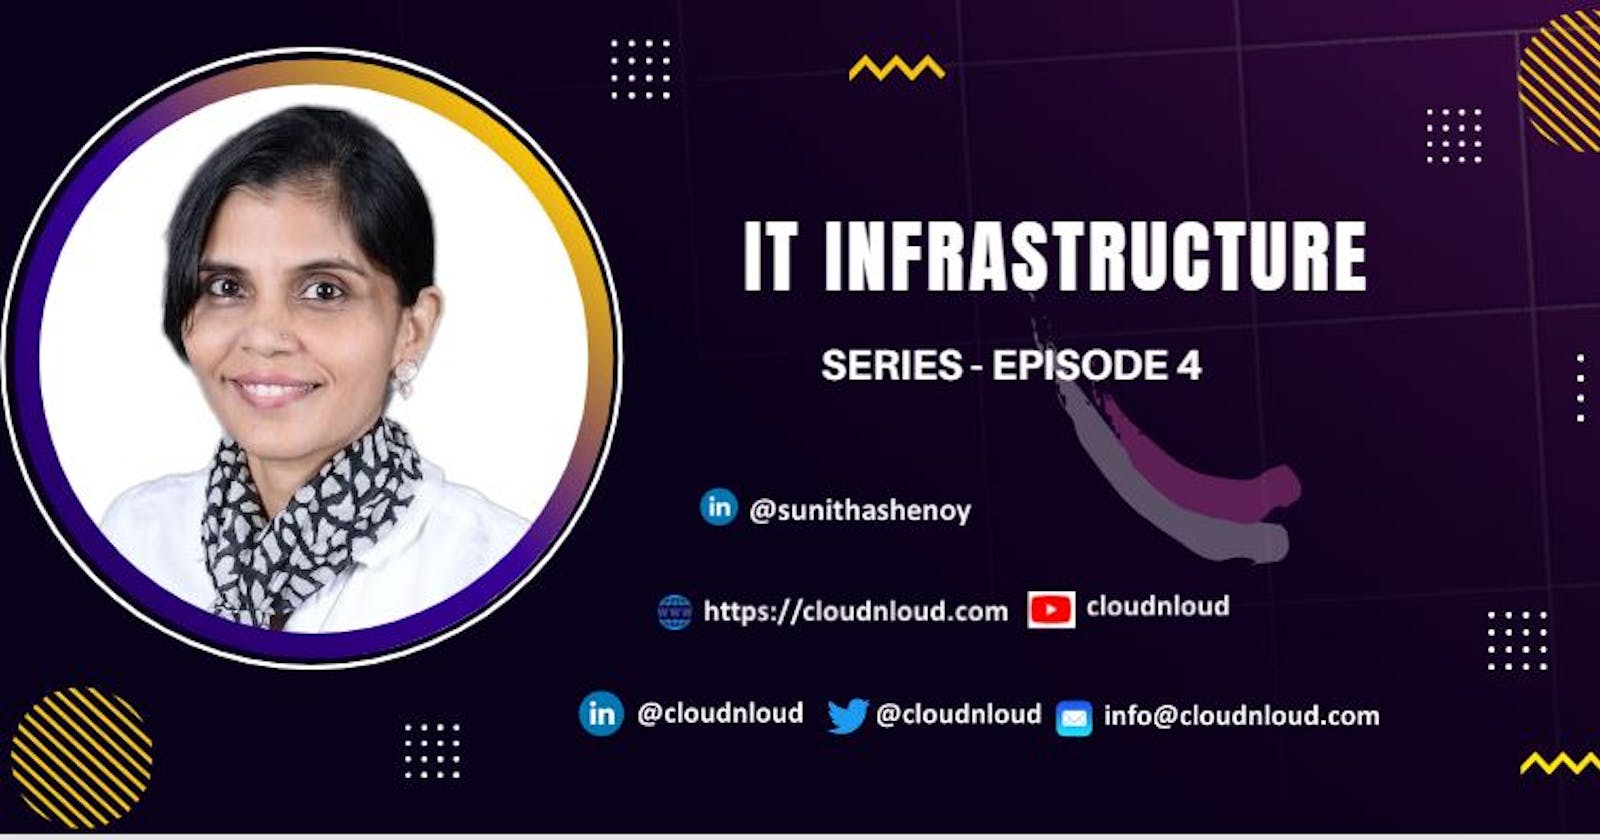 IT Infrastructure Series - Episode 4